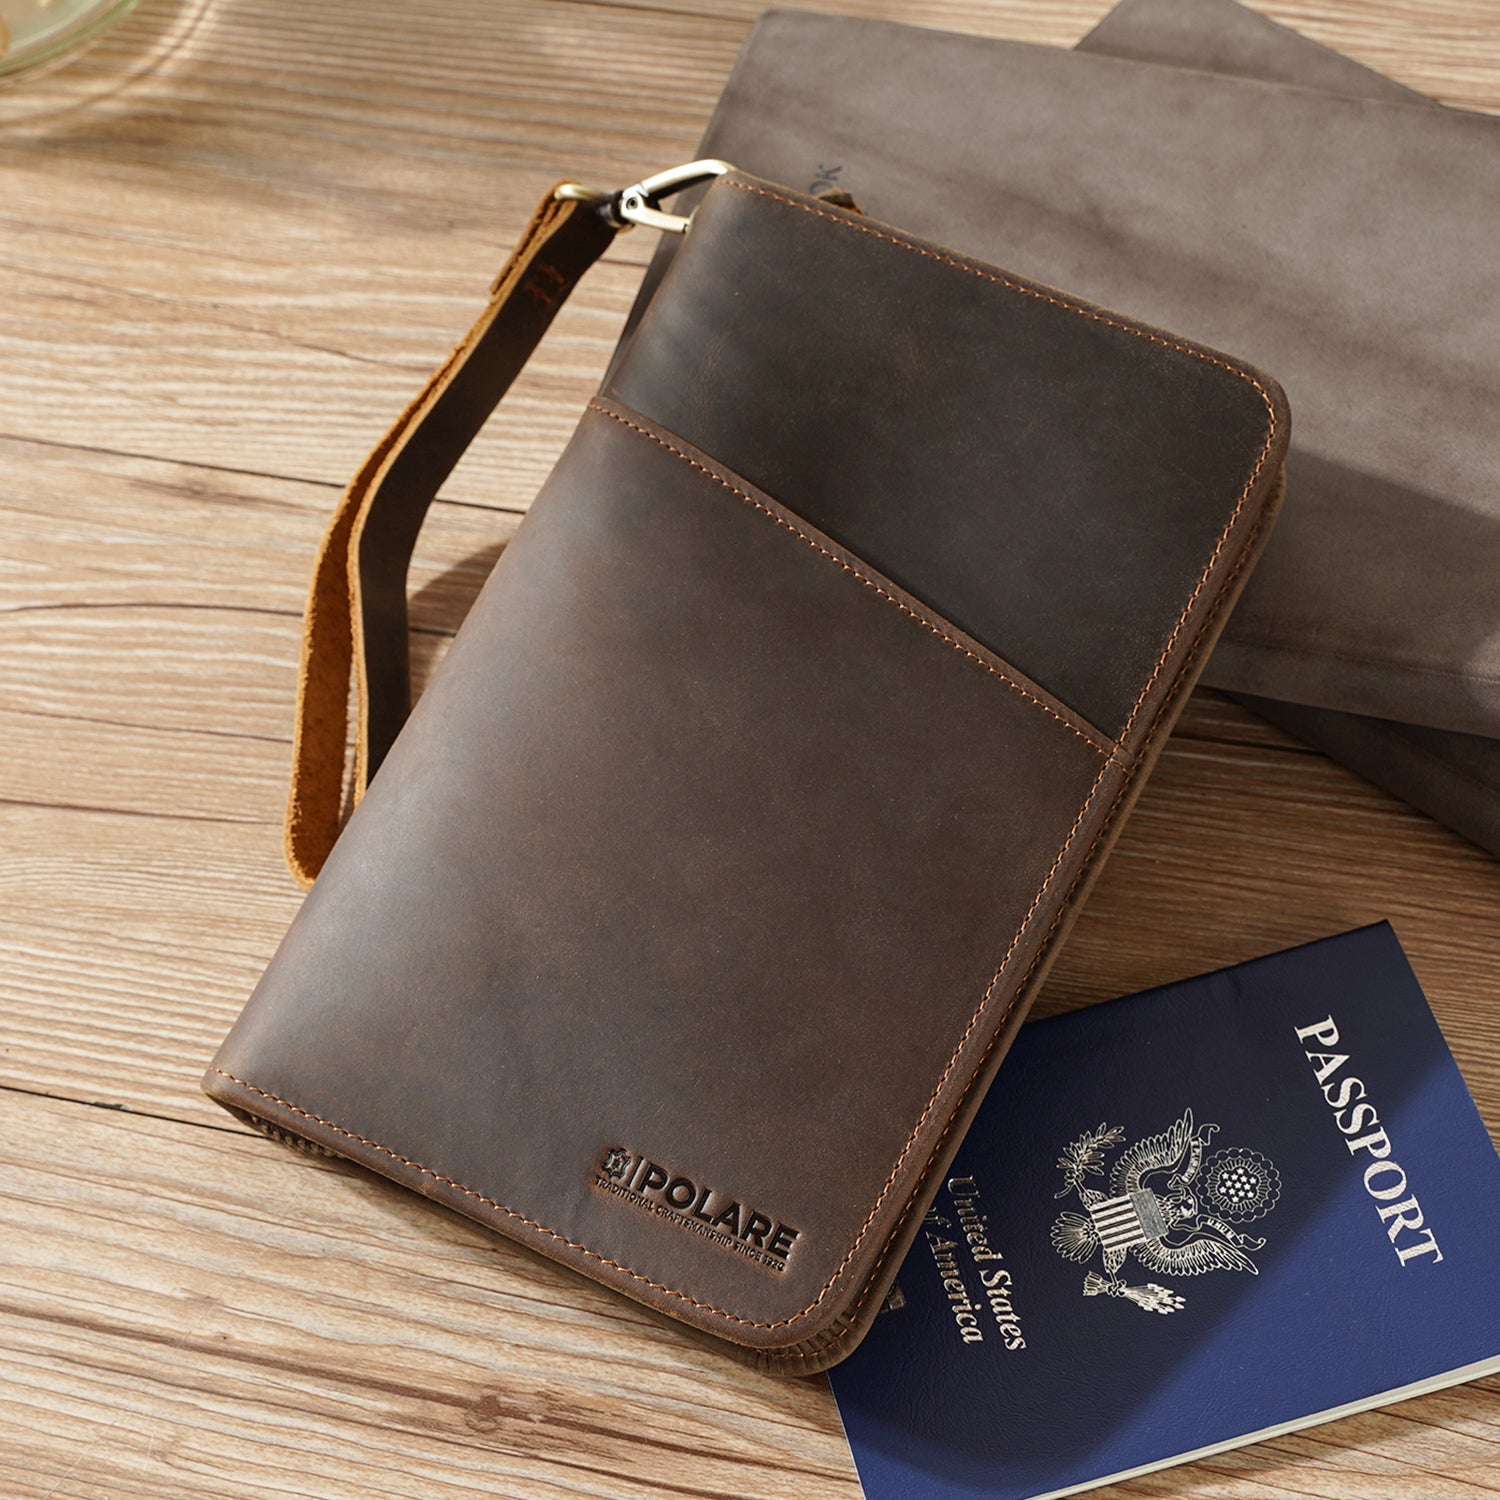  Leather Travel Wallet with Passport Holder - Genuine